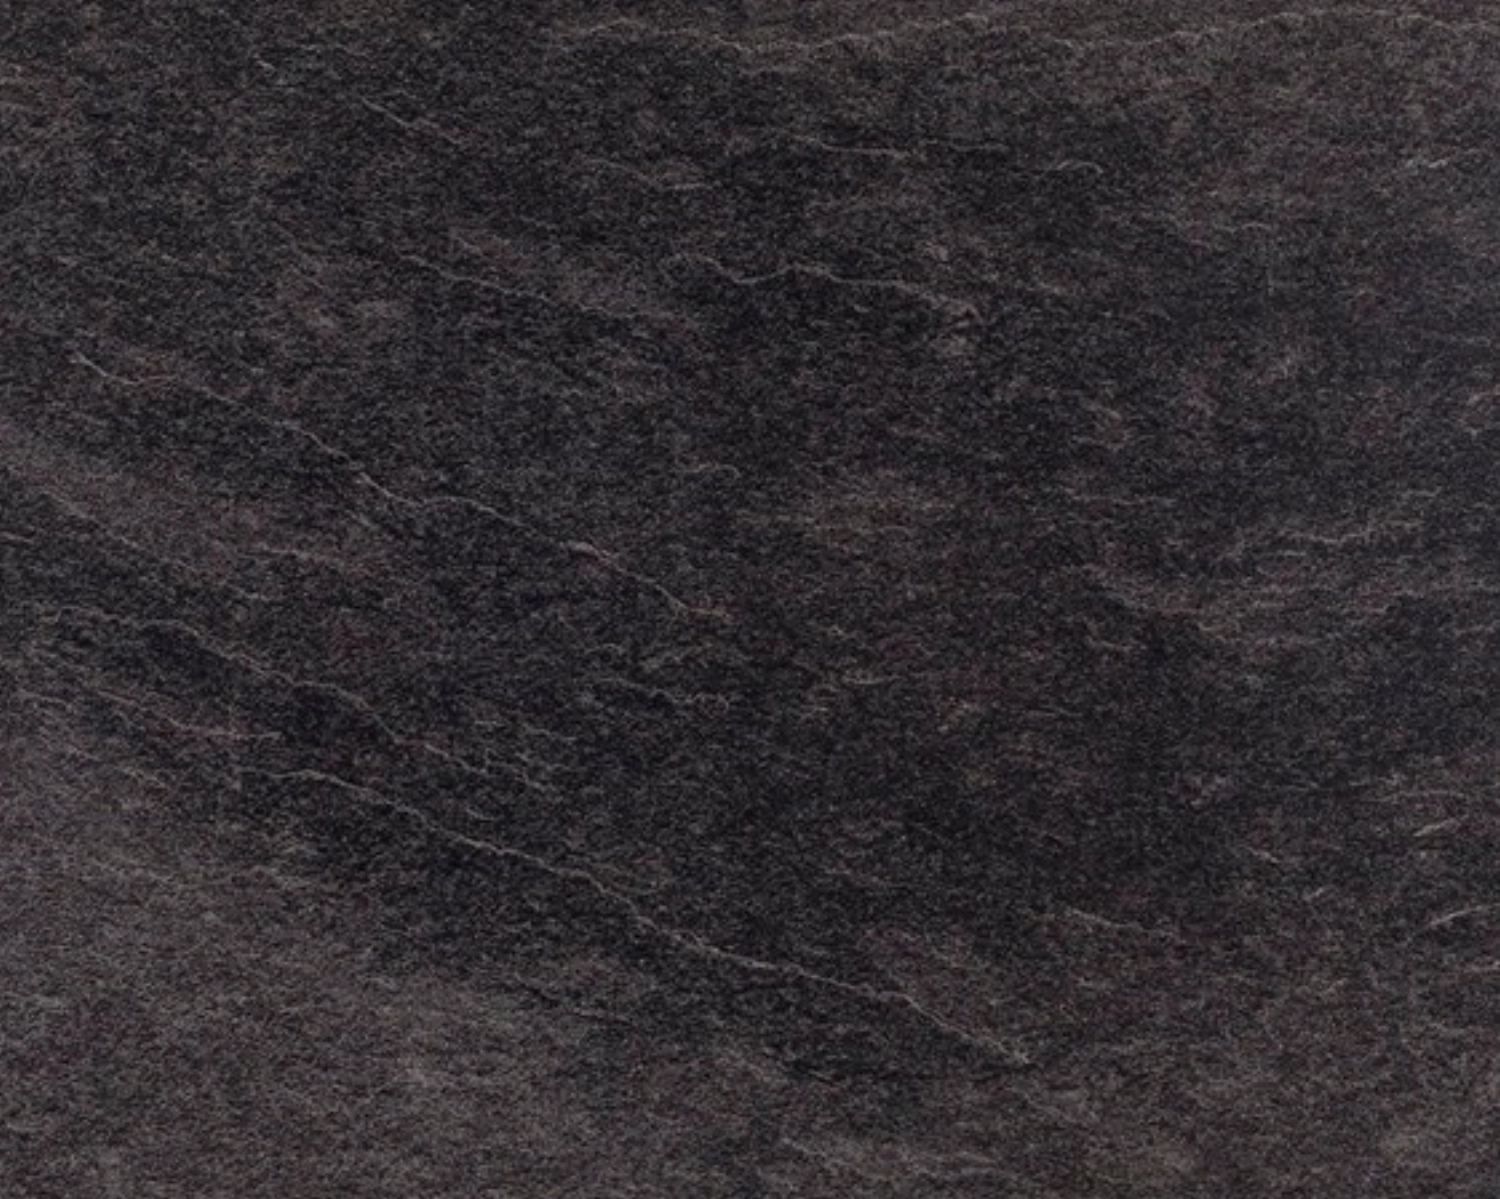 Tablett Self Dark Marble 46x36cm